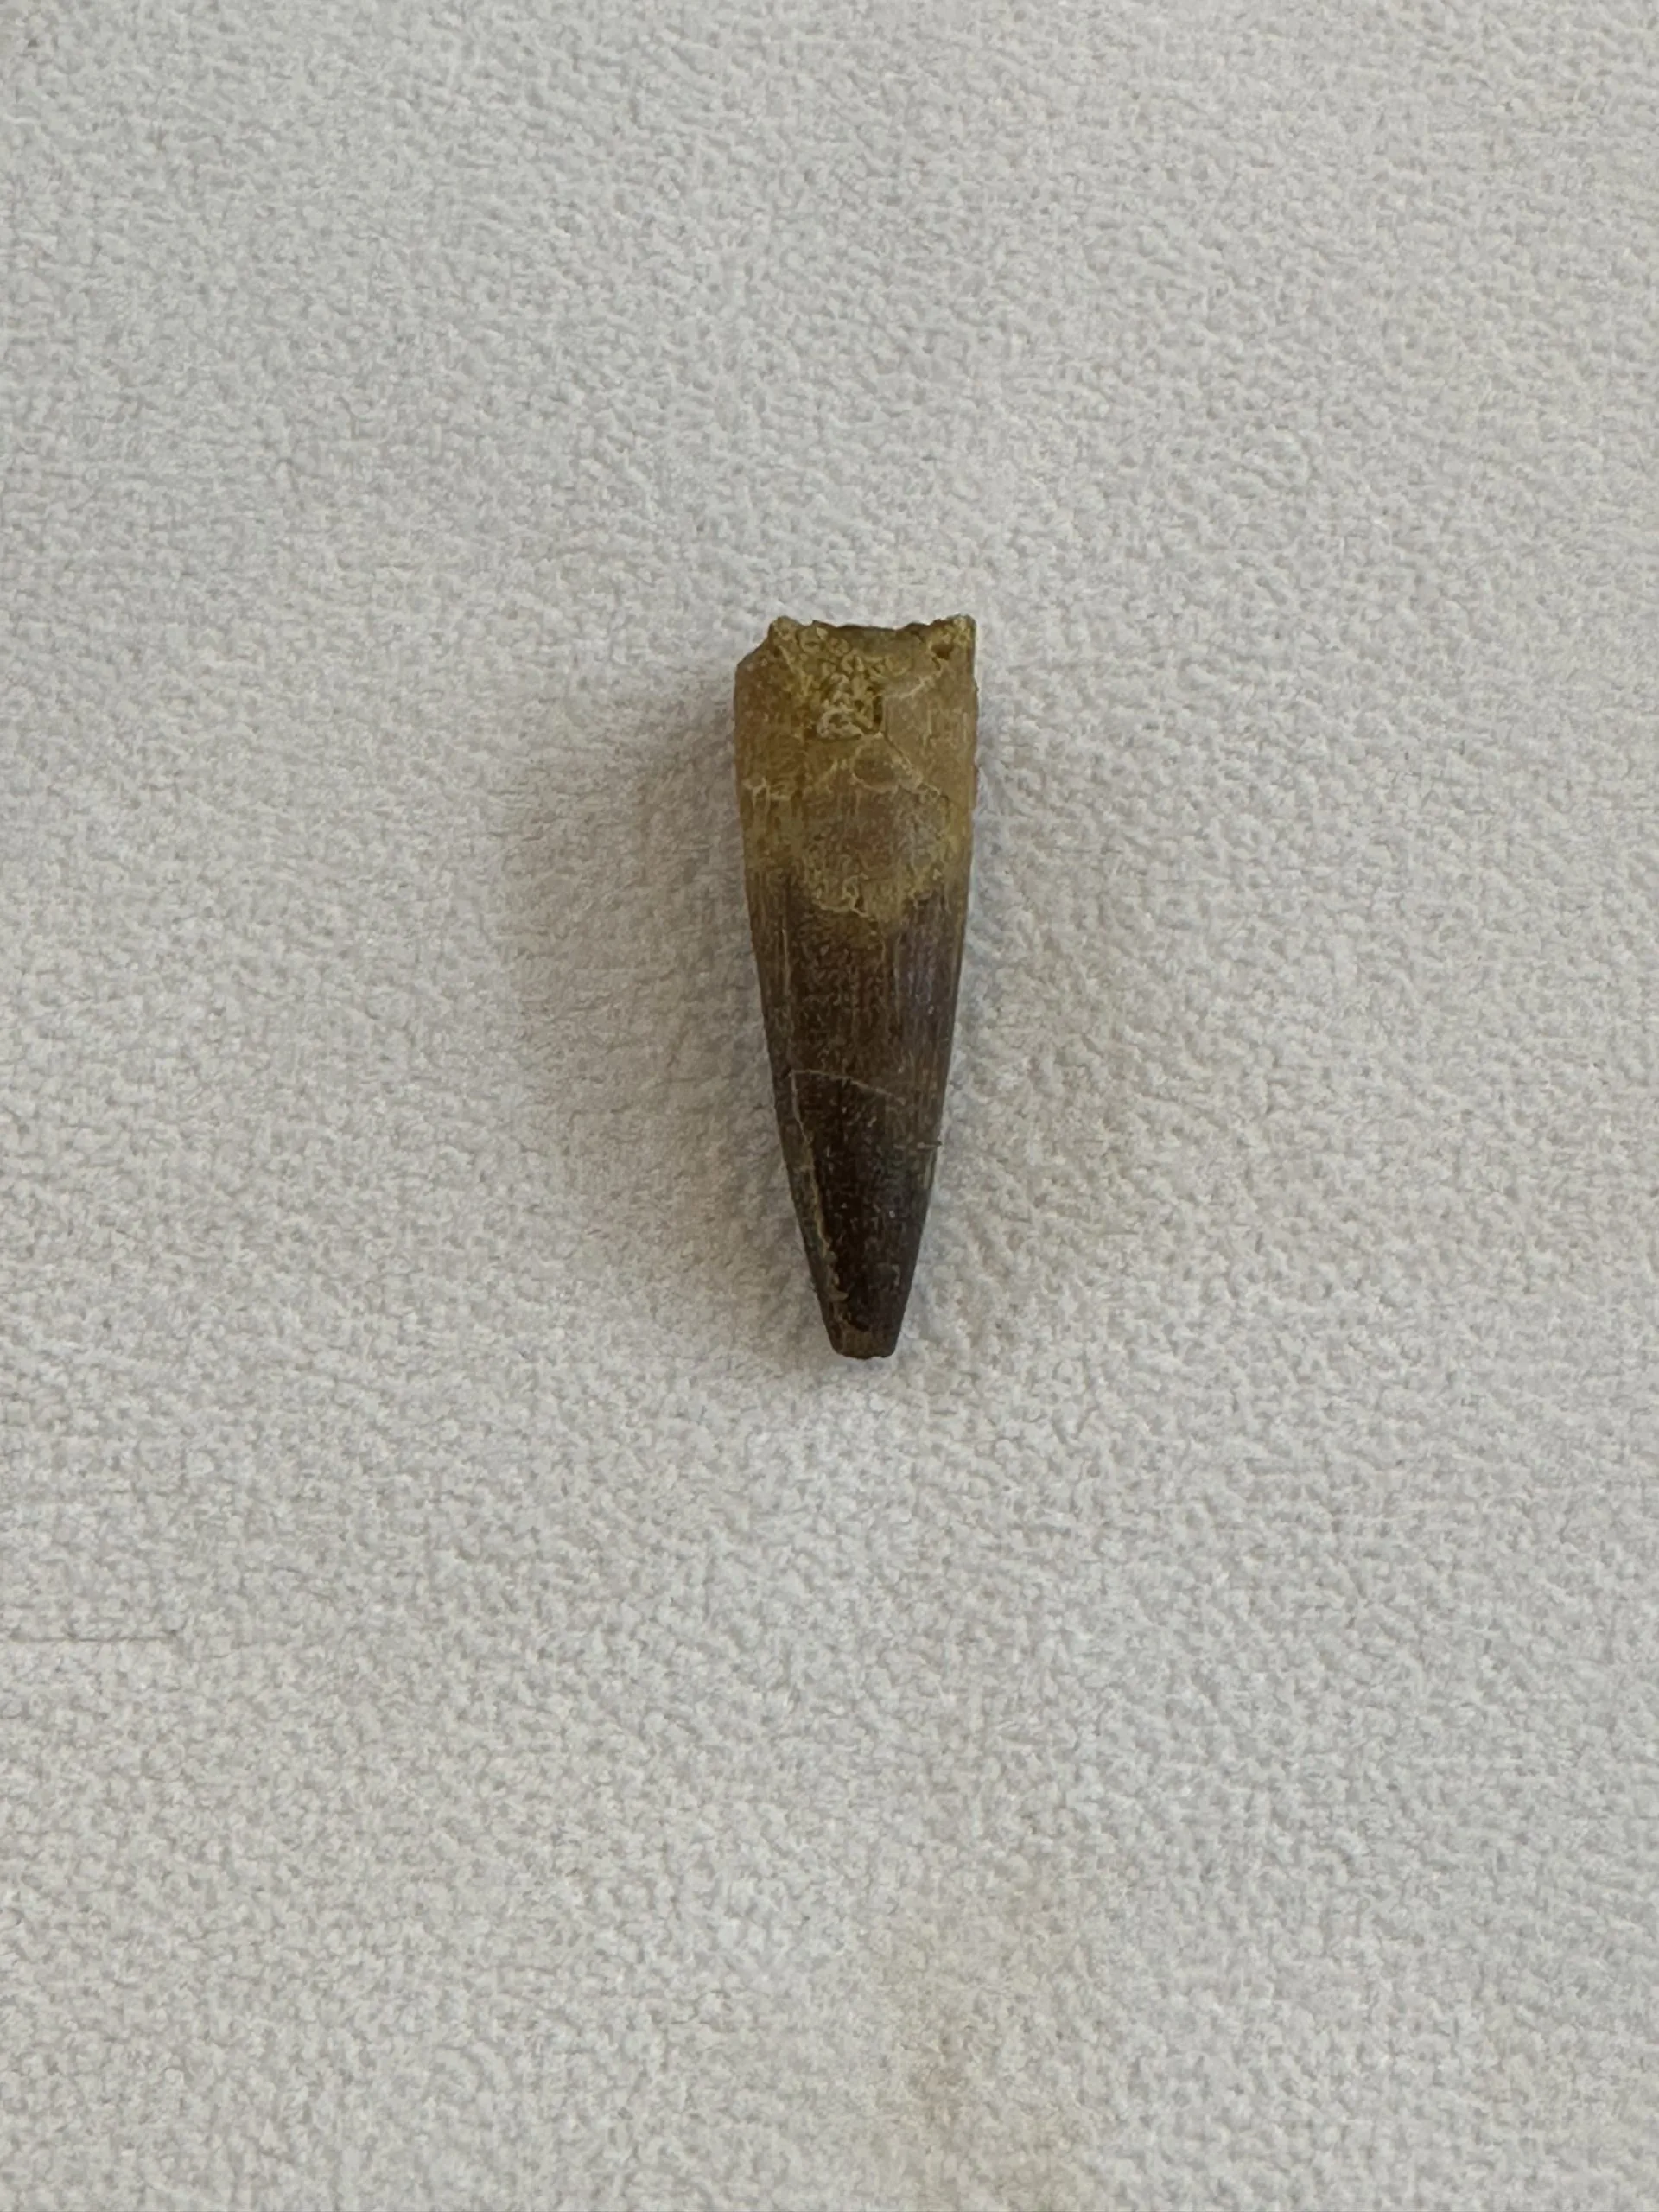 Spinosaurus Tooth, Morocco, Great collector specimen Prehistoric Online